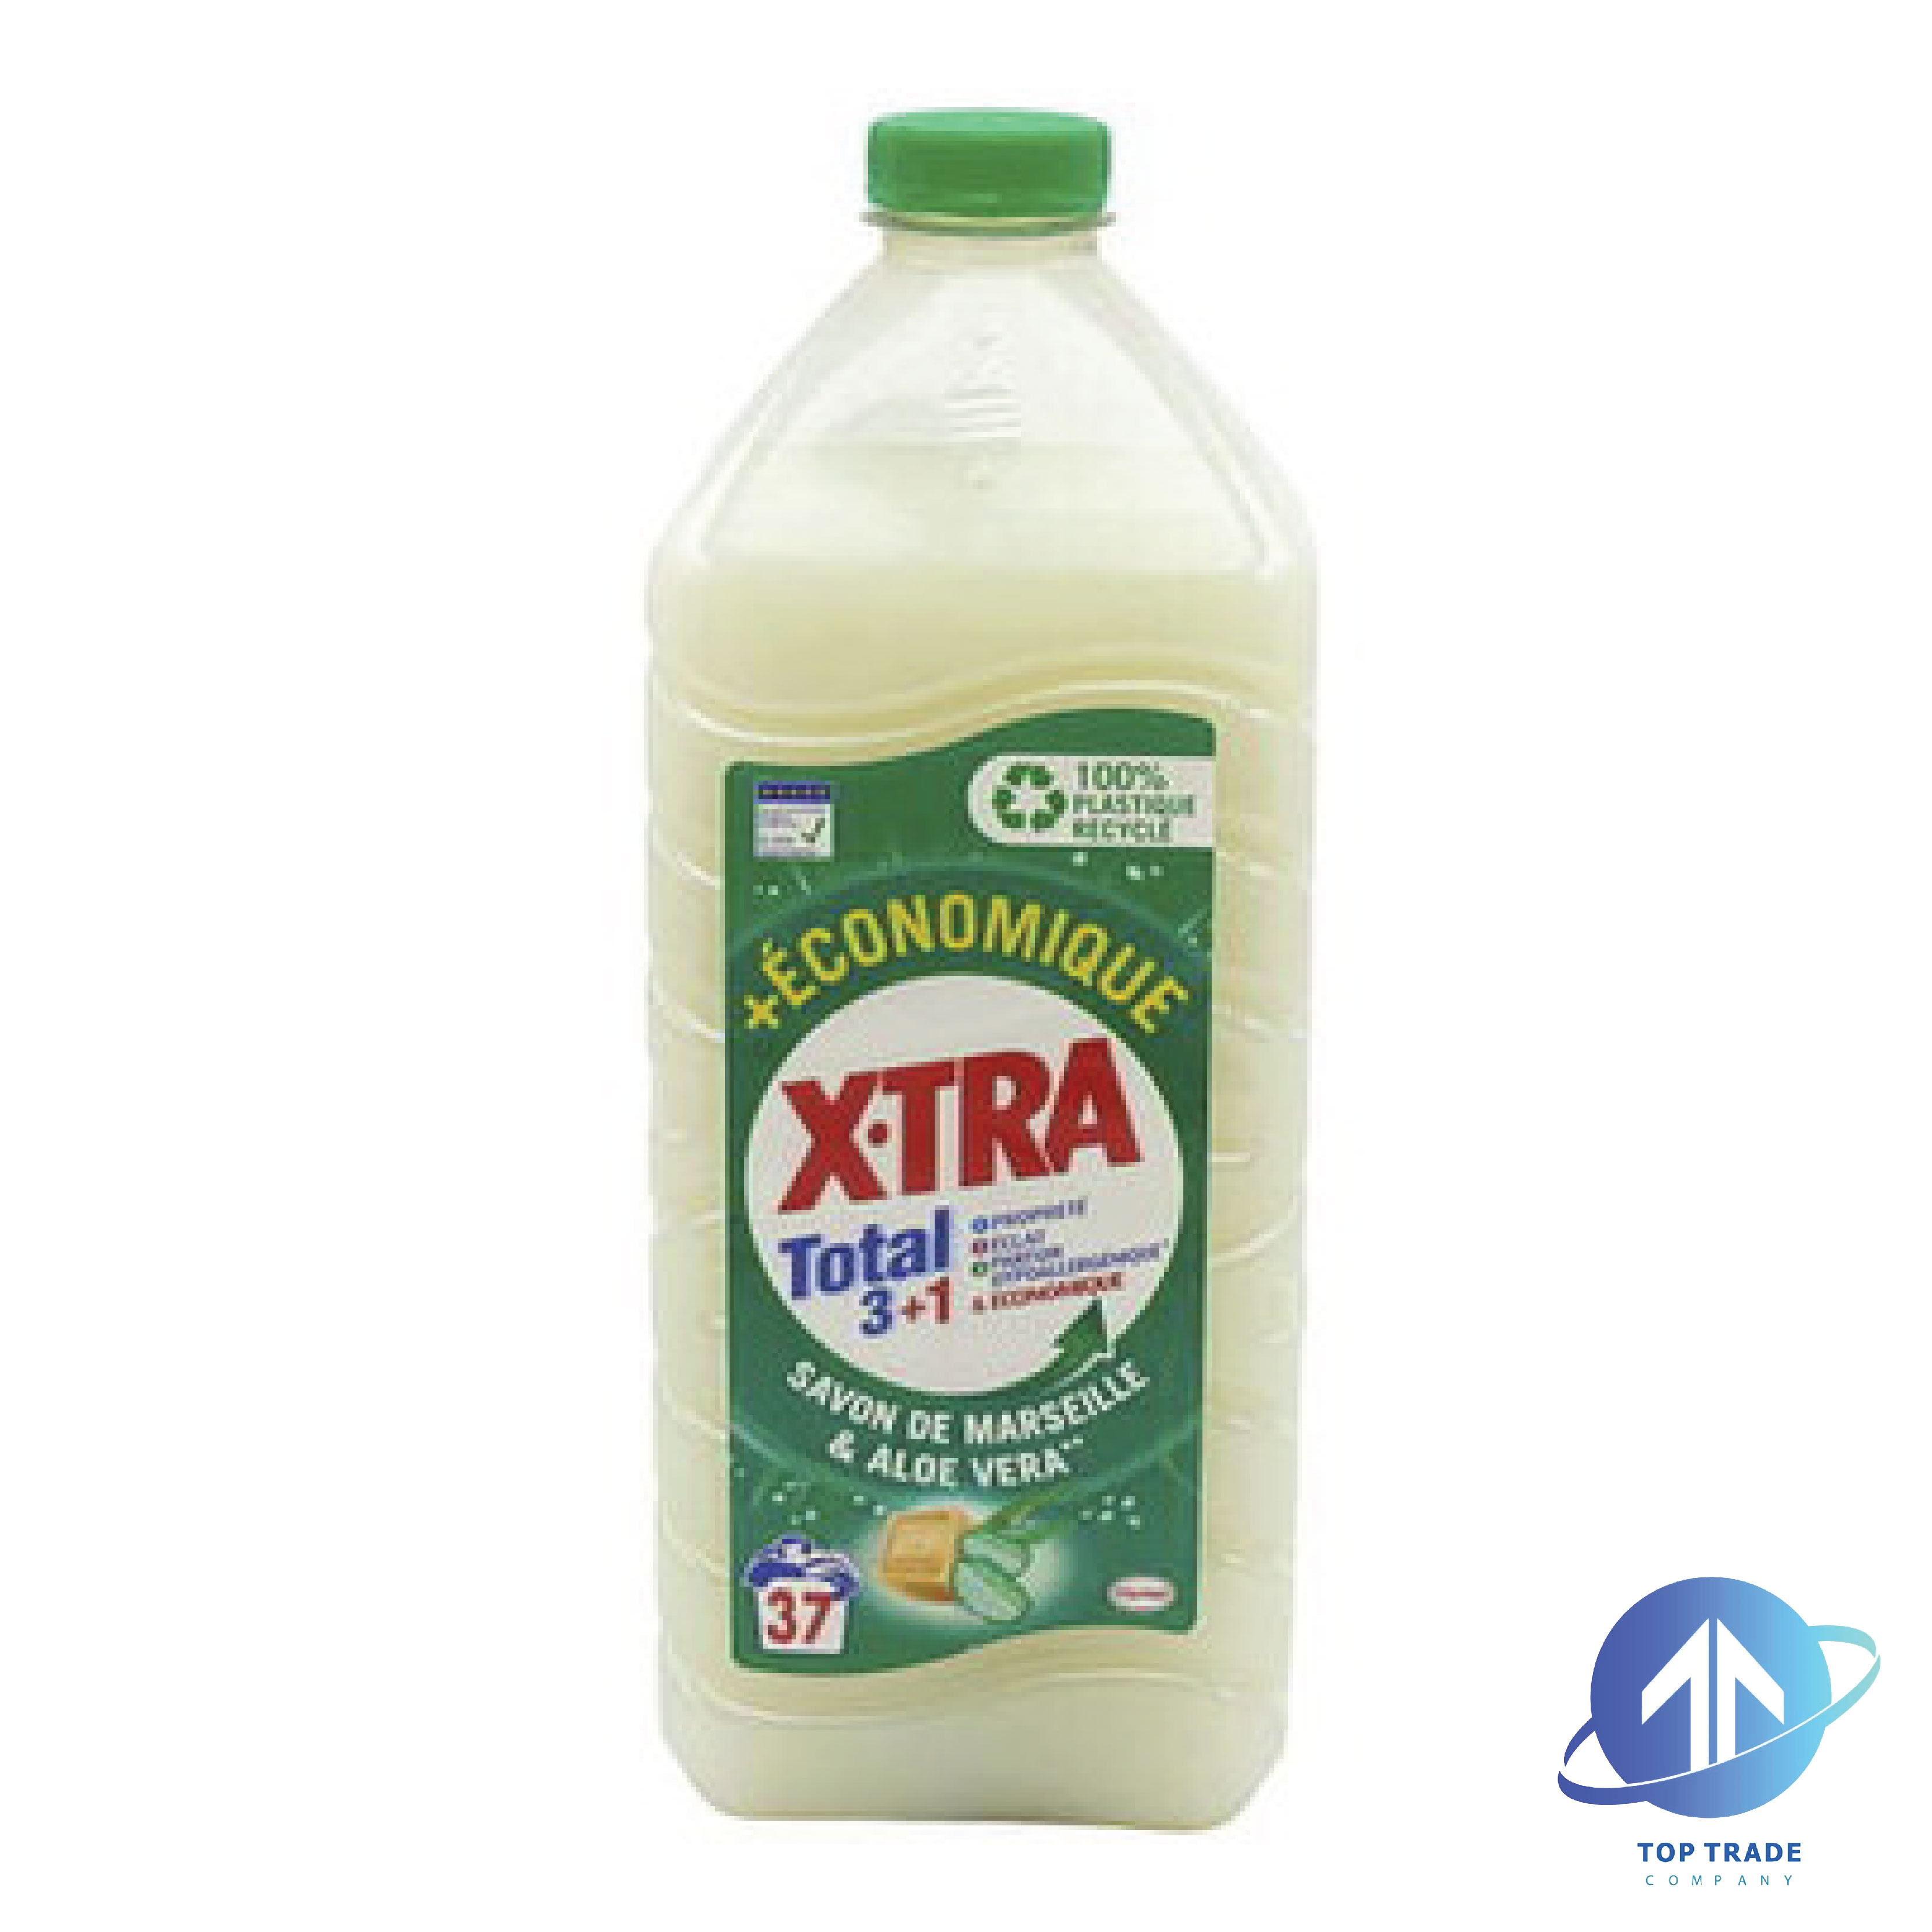 X-tra lessive liquid detergent economic total marseille soap 1,85l/37sc